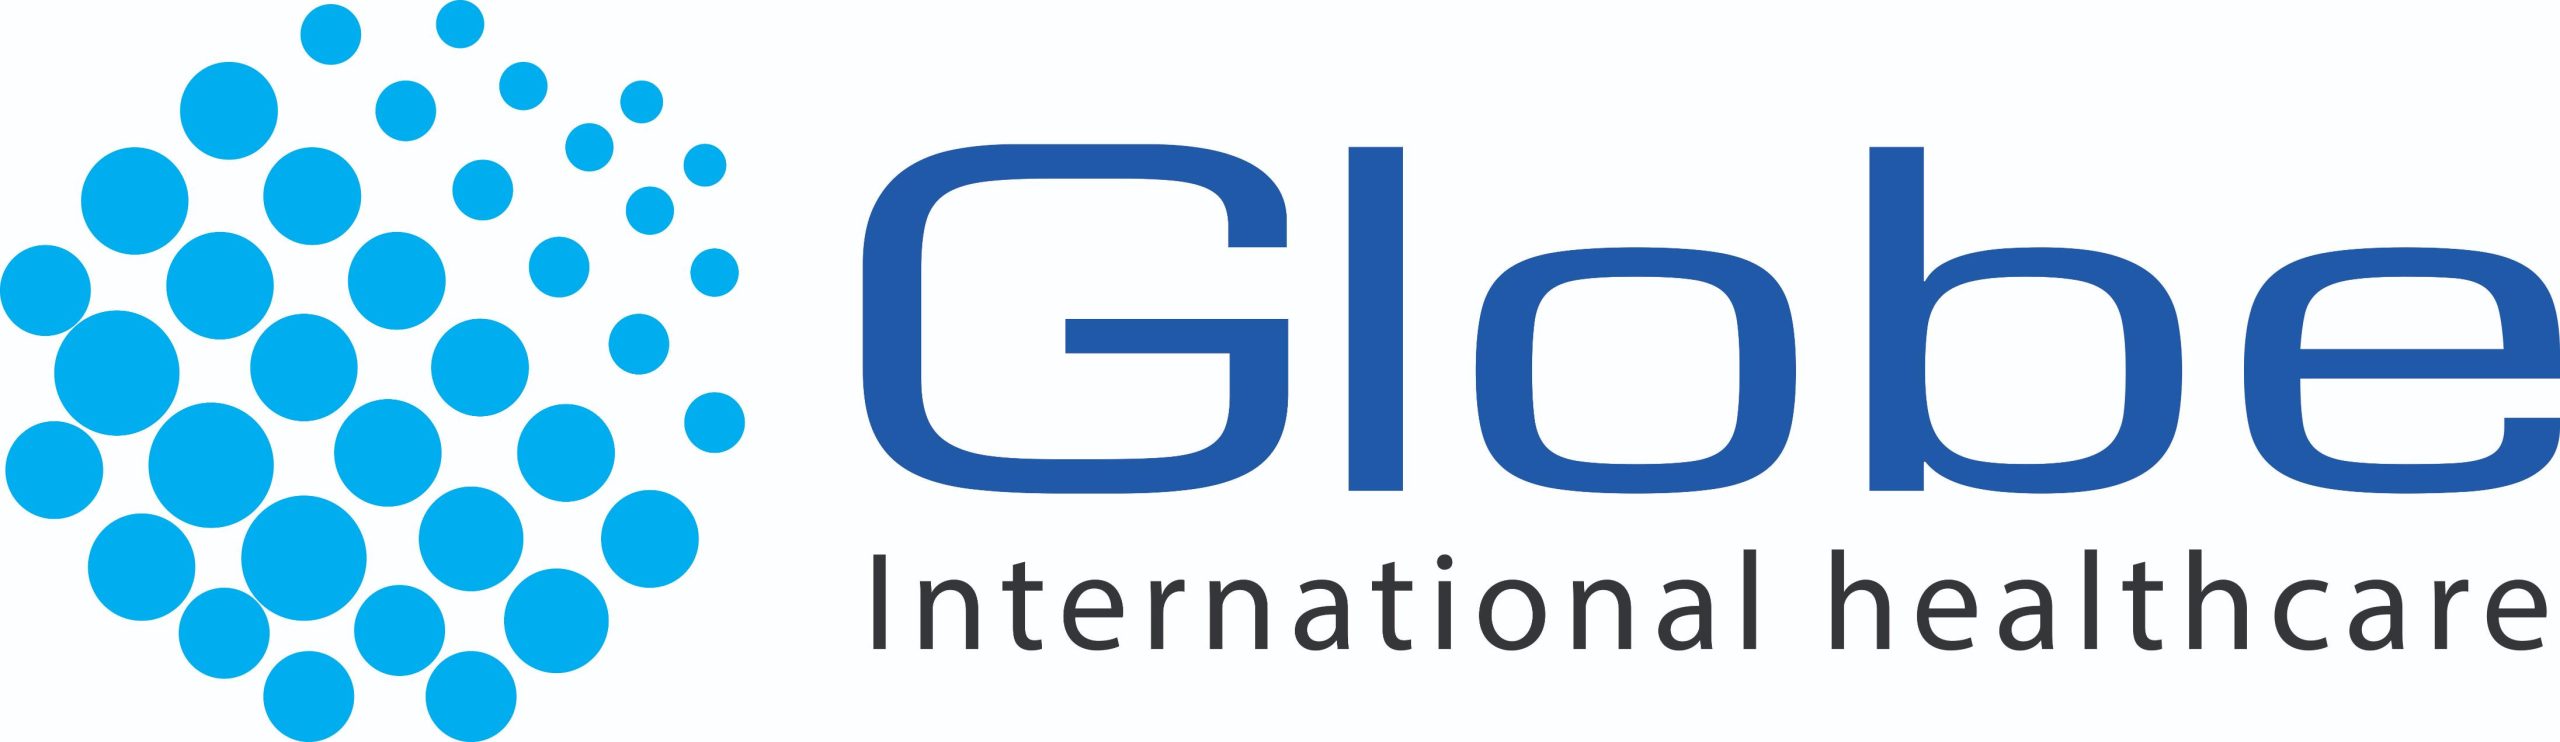 GLOBE International healthcare logo